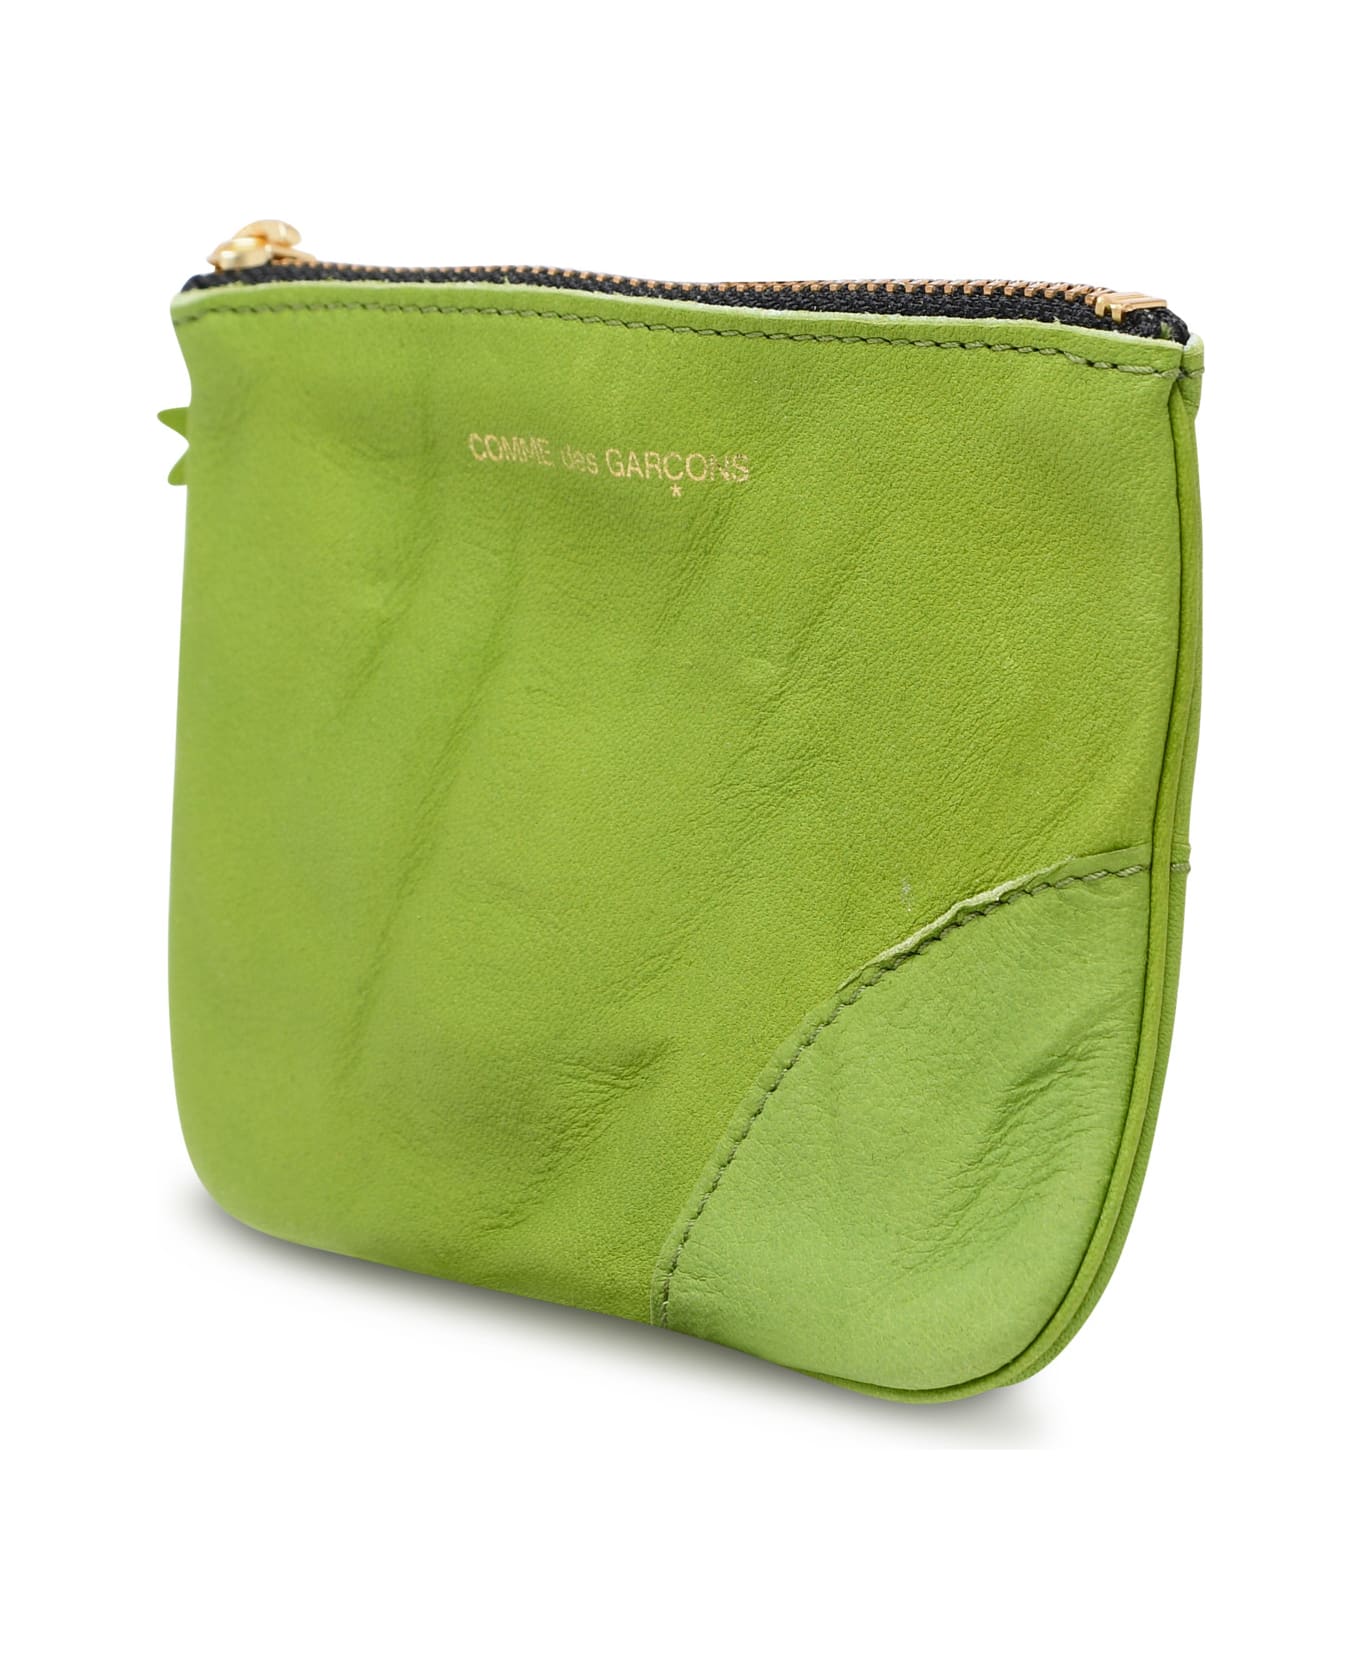 Comme des Garçons Wallet Green Leather Card Holder - Green 財布